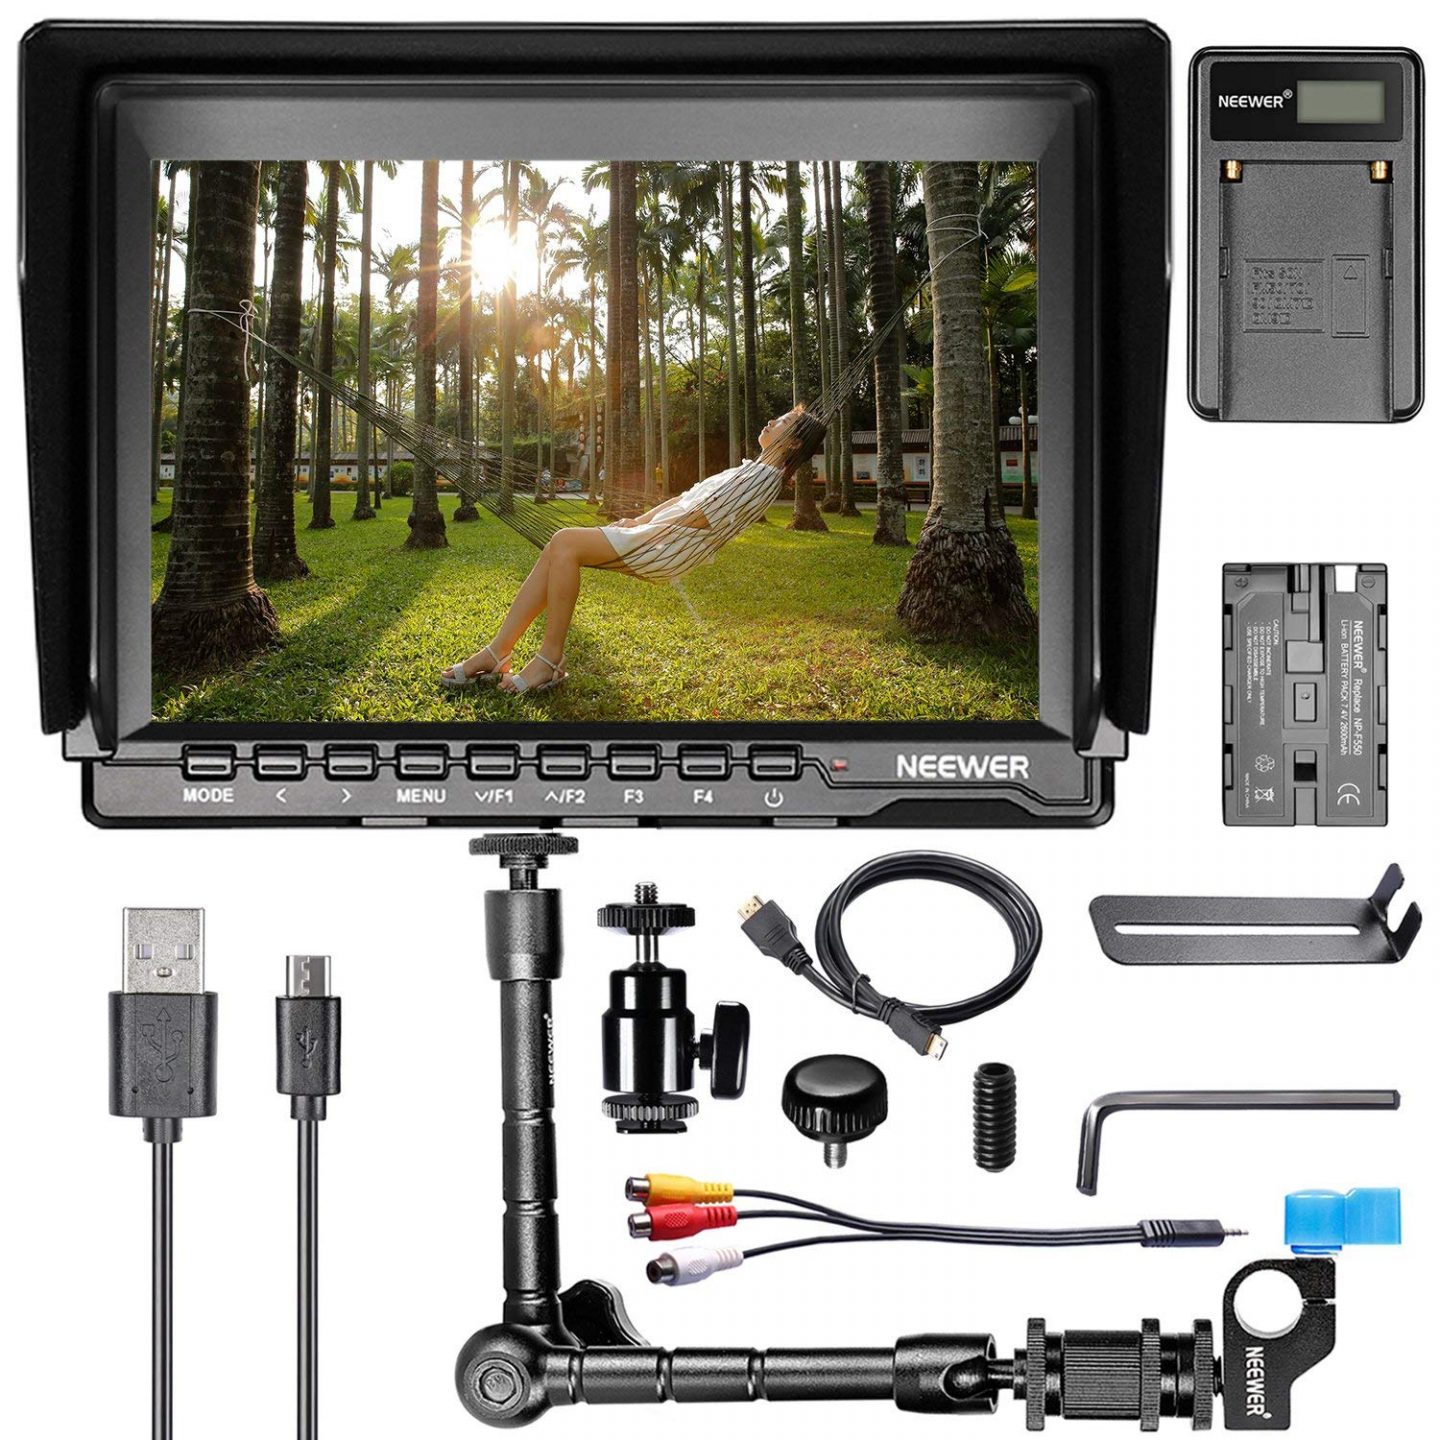 Camera kit and Monitor from Amazon